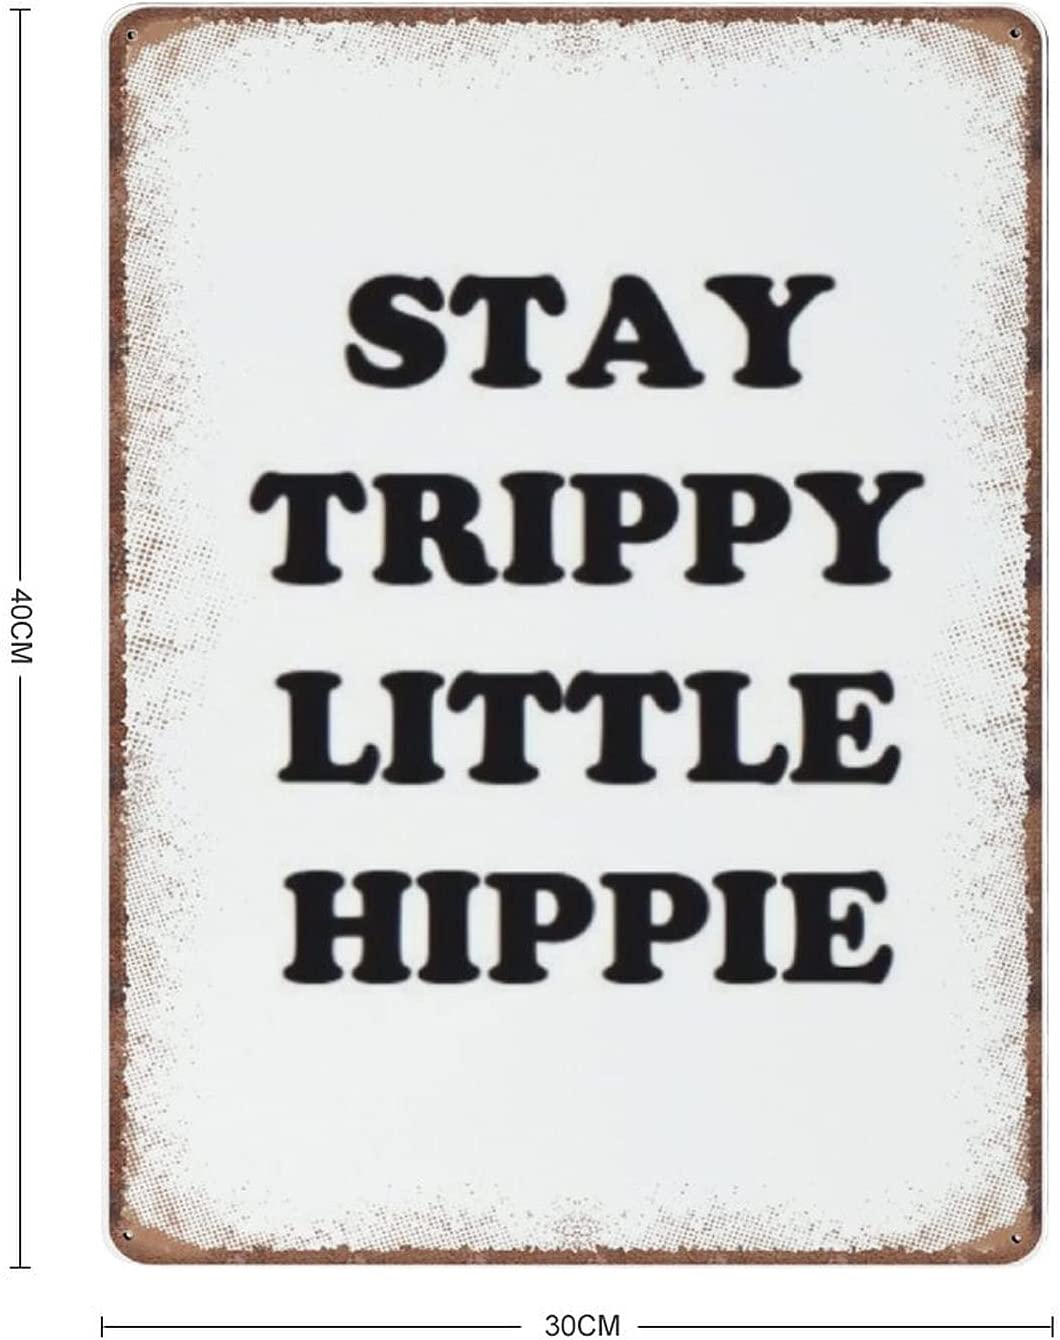 hippie tumblr quotes